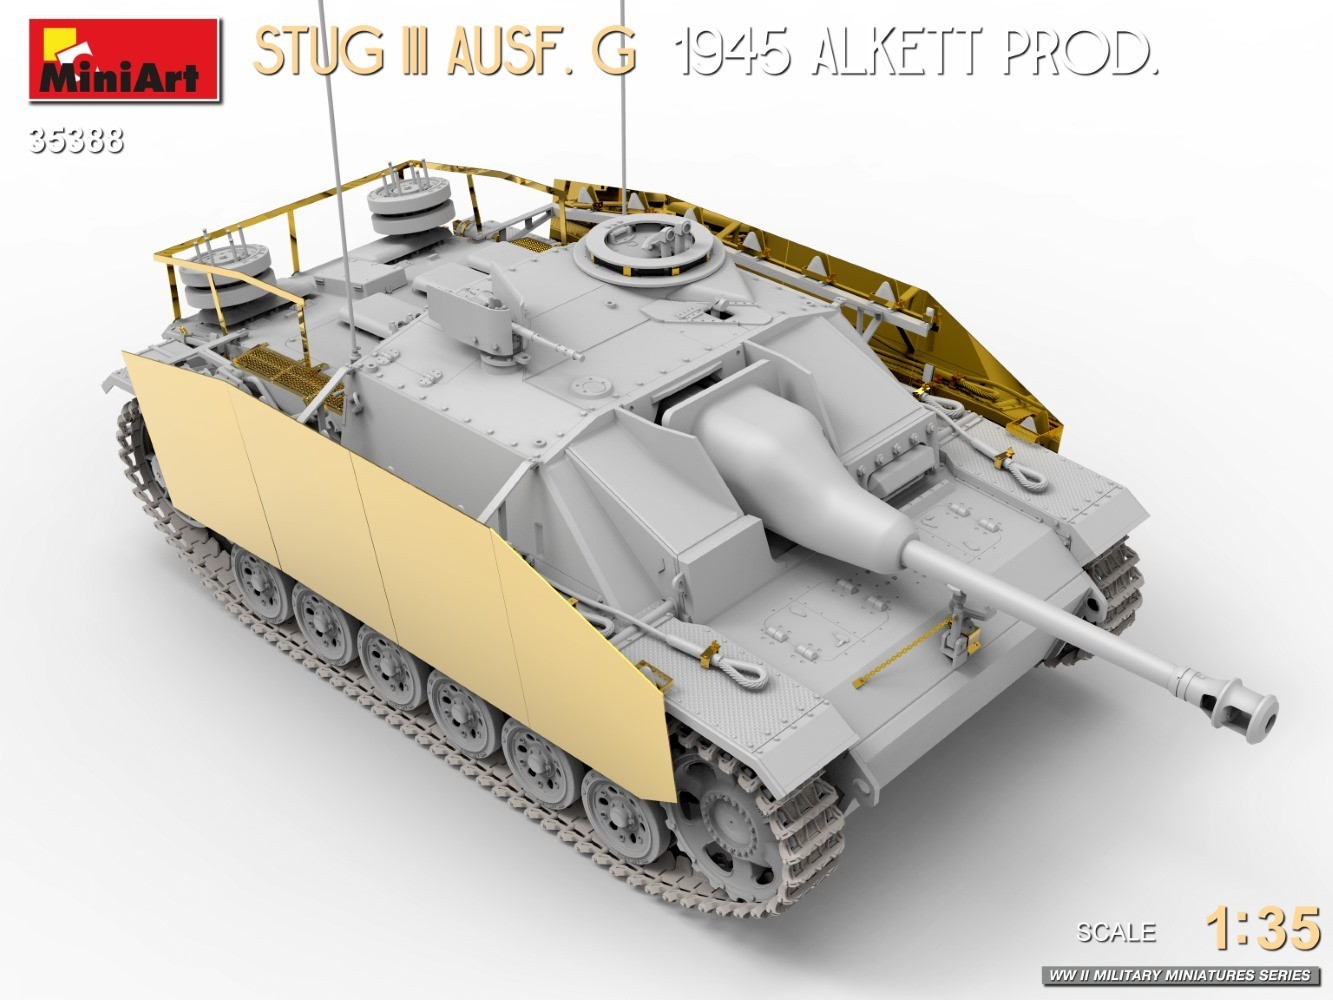 MiniArt to Release Highly Detailed 1/35 StuG III Ausf. G 1945 Alkett Prod. Model KitCAD-2